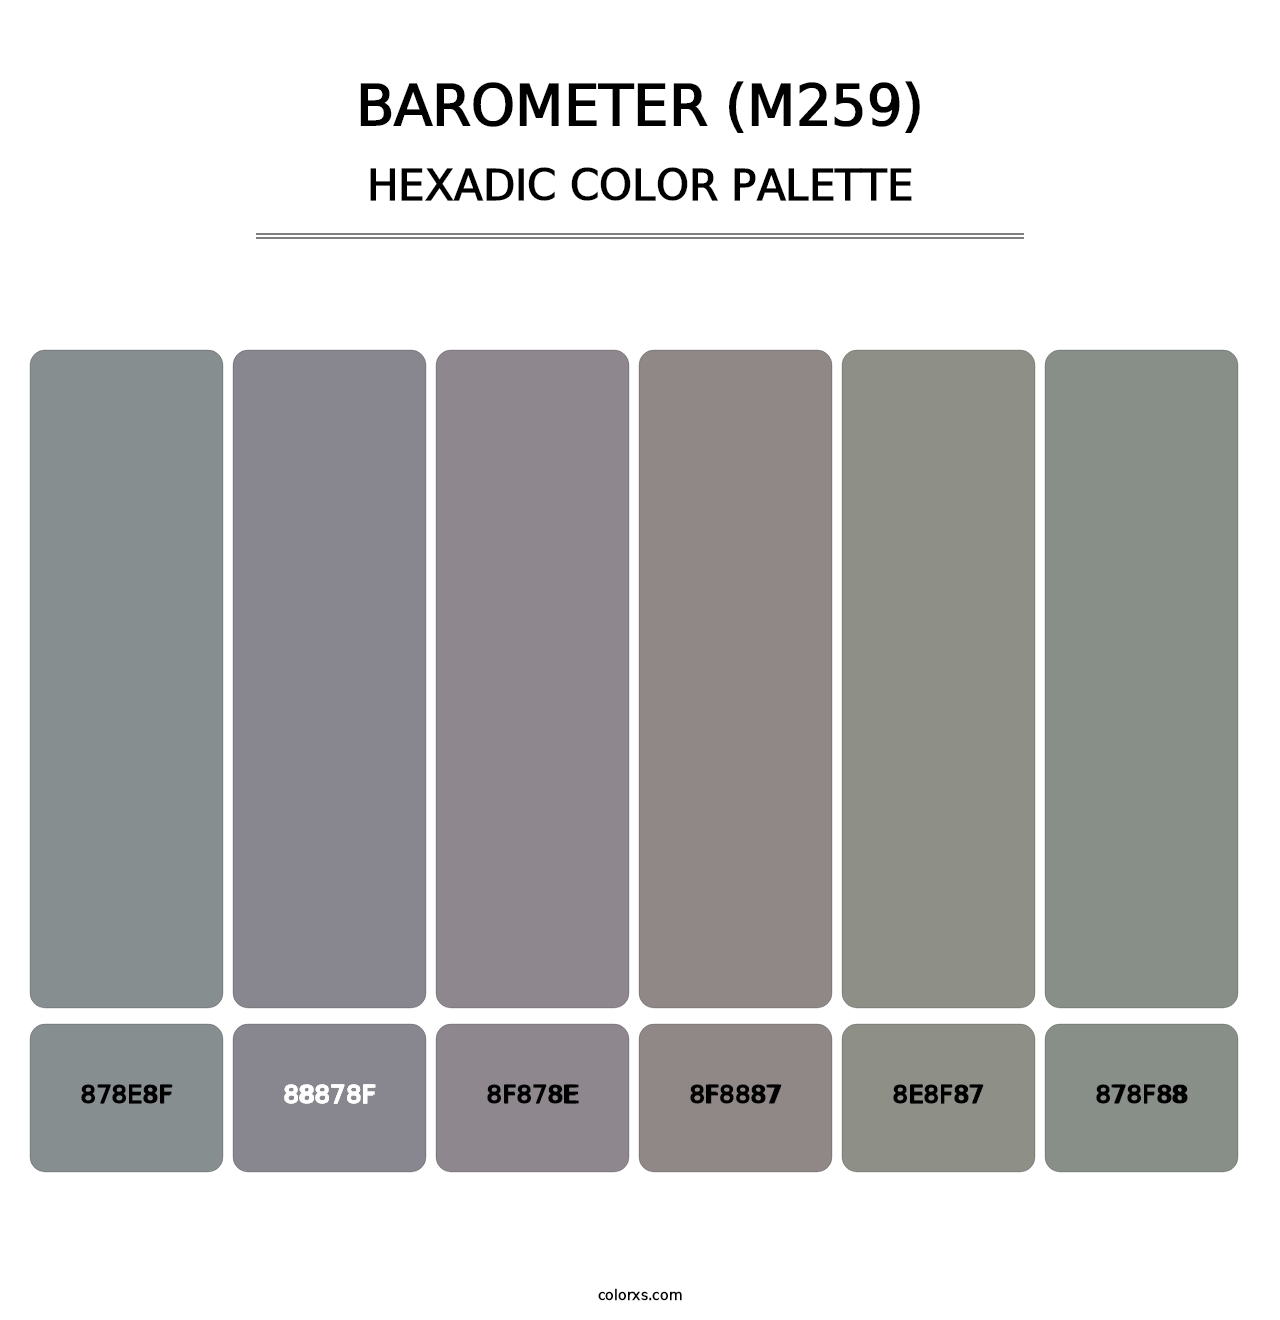 Barometer (M259) - Hexadic Color Palette